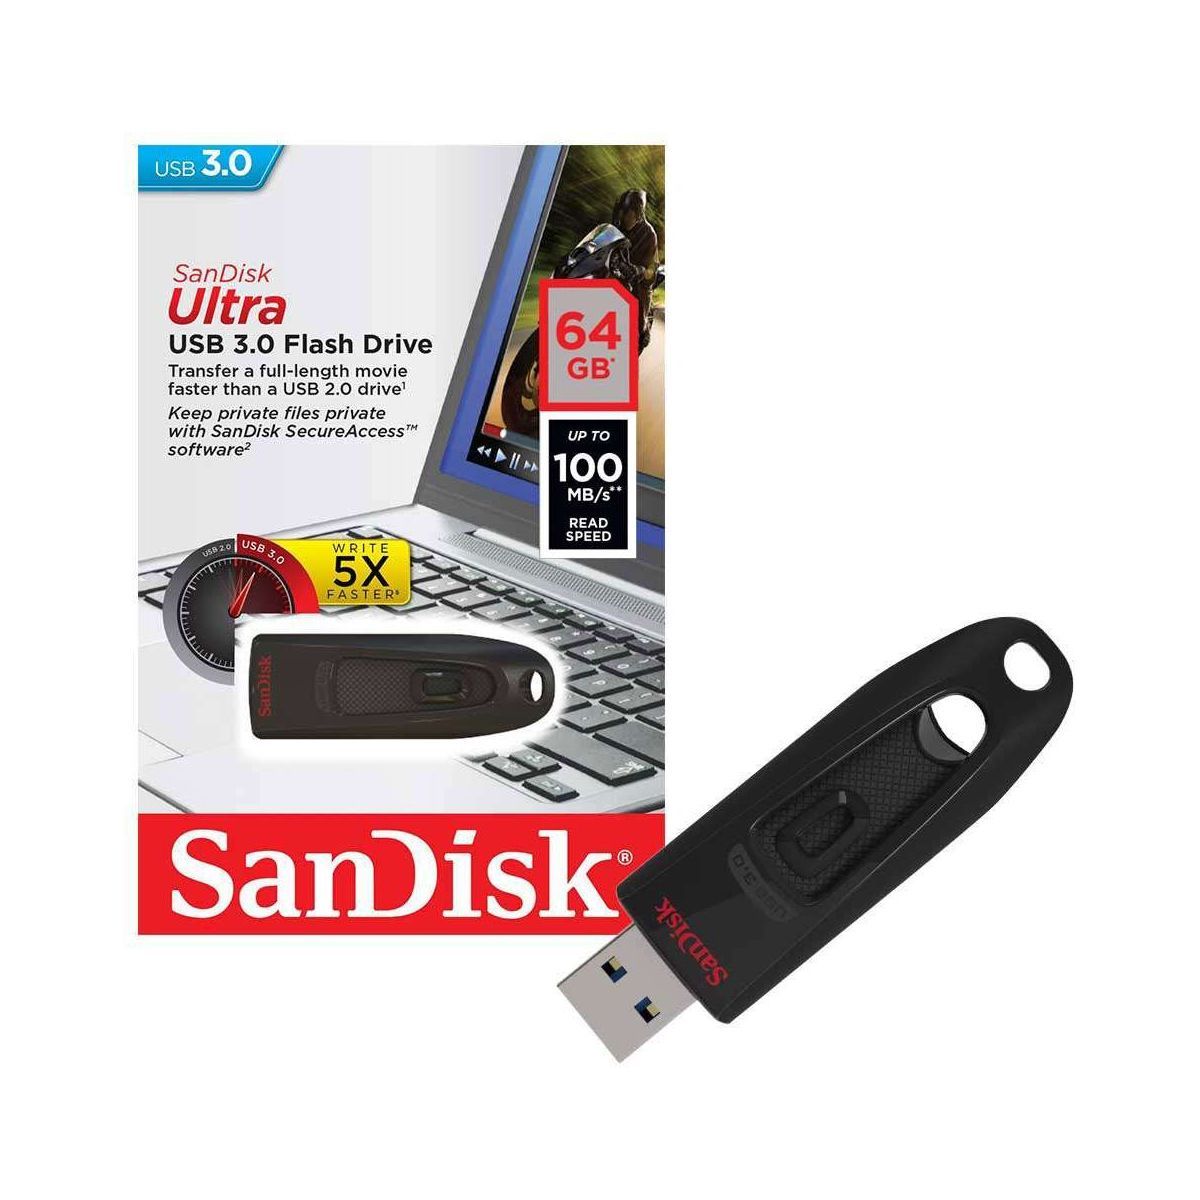 Cle usb 16GB SanDisk Ultra Fit USB 3.0